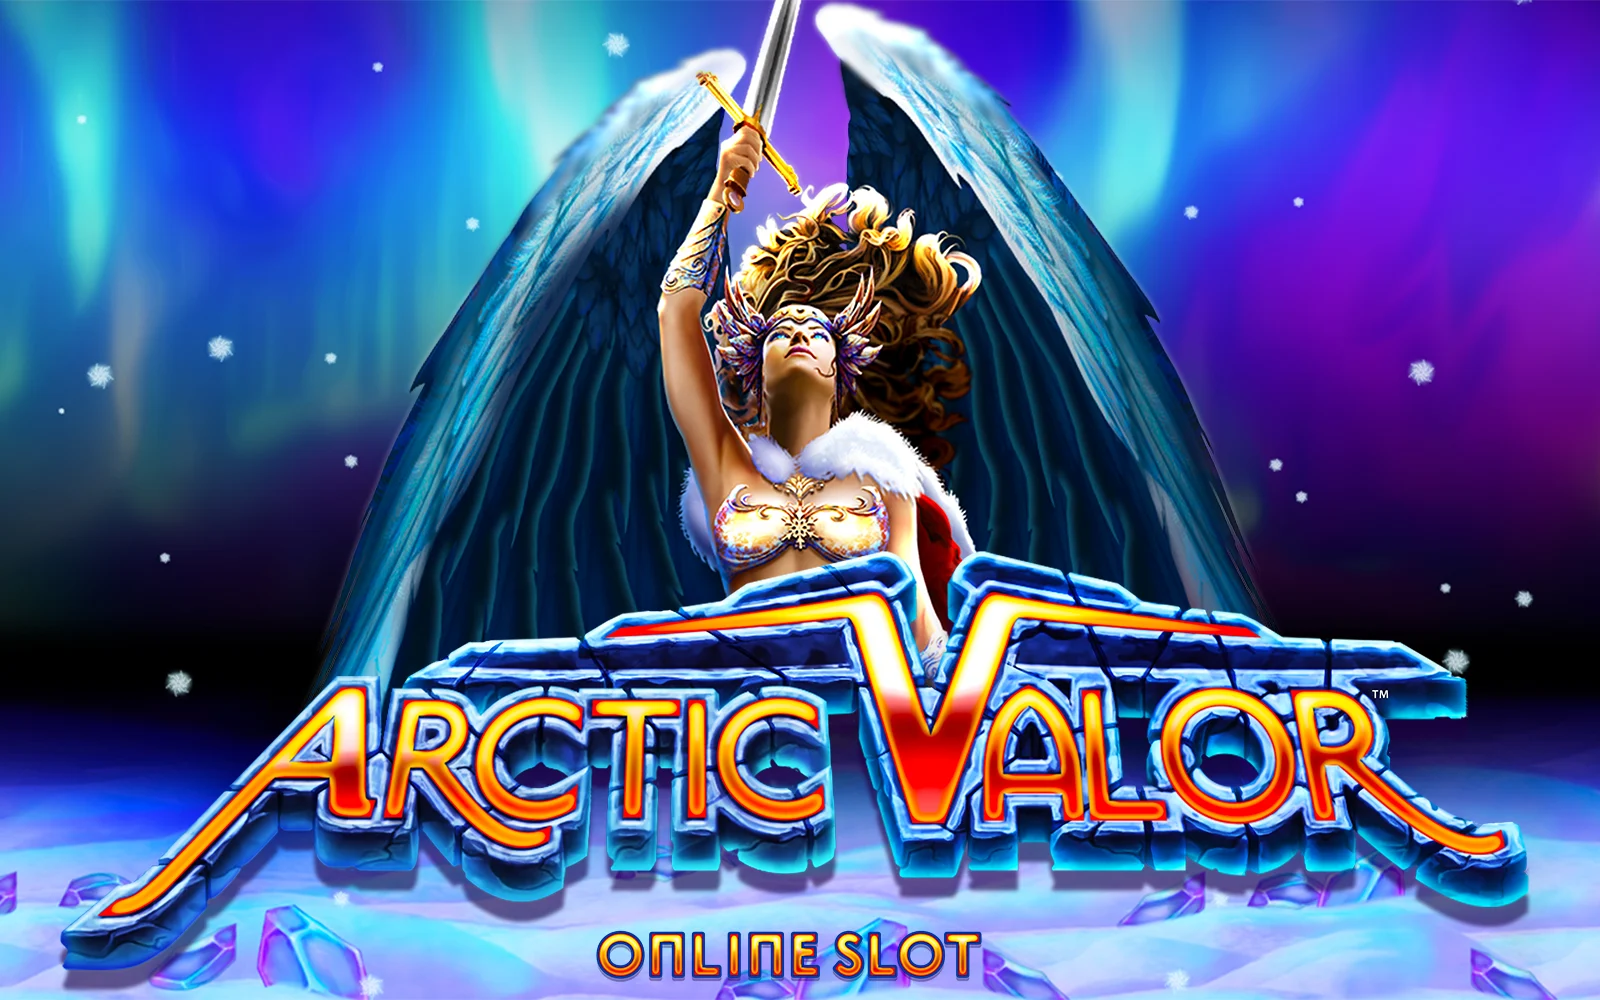 Play Arctic Valor on Starcasino.be online casino